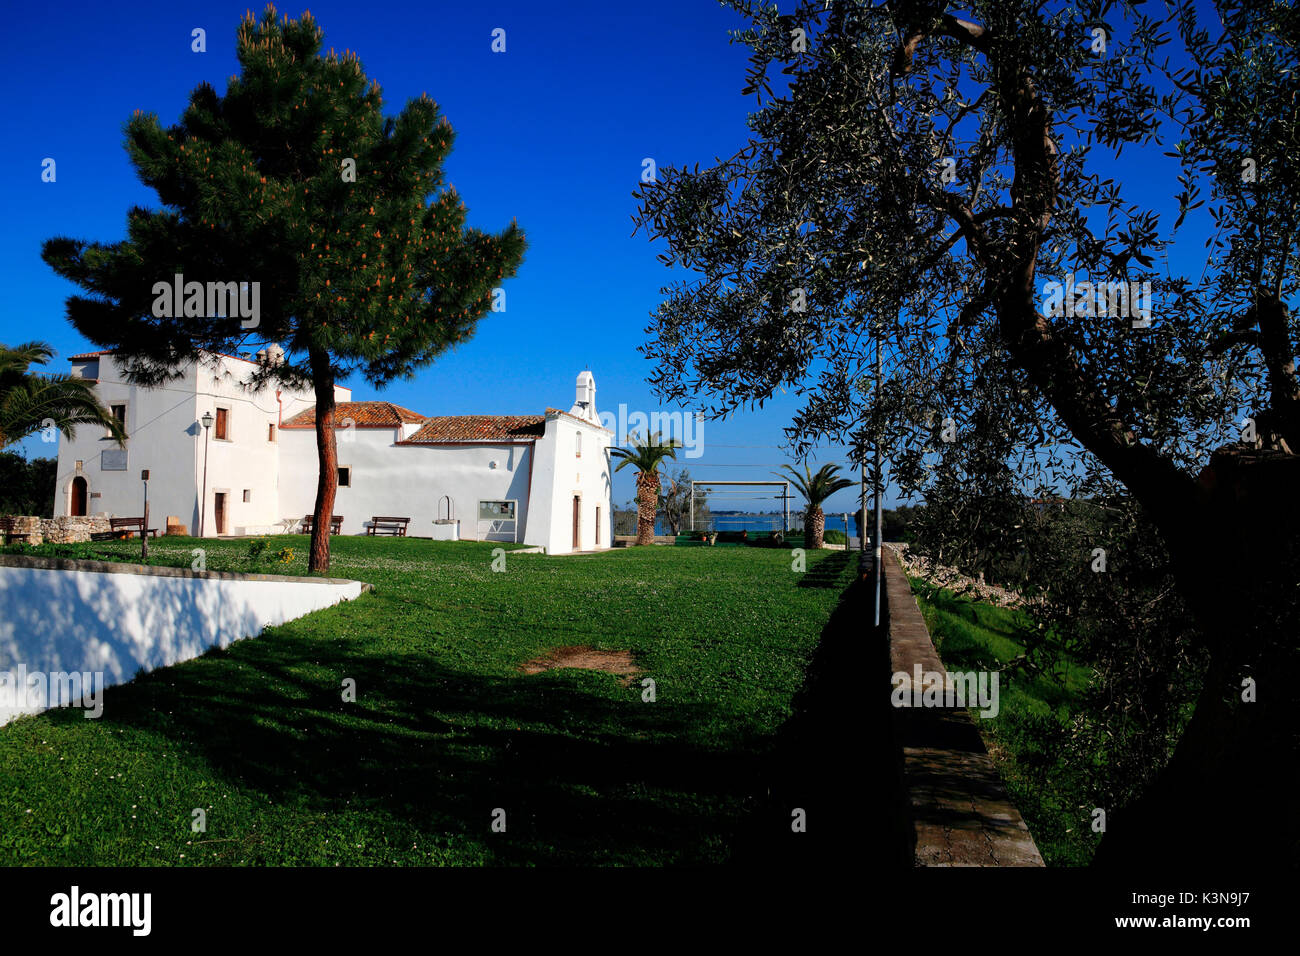 The Crocifisso di Varano, very important Christian site on the Varano lakeside, Apulia, Italy Stock Photo